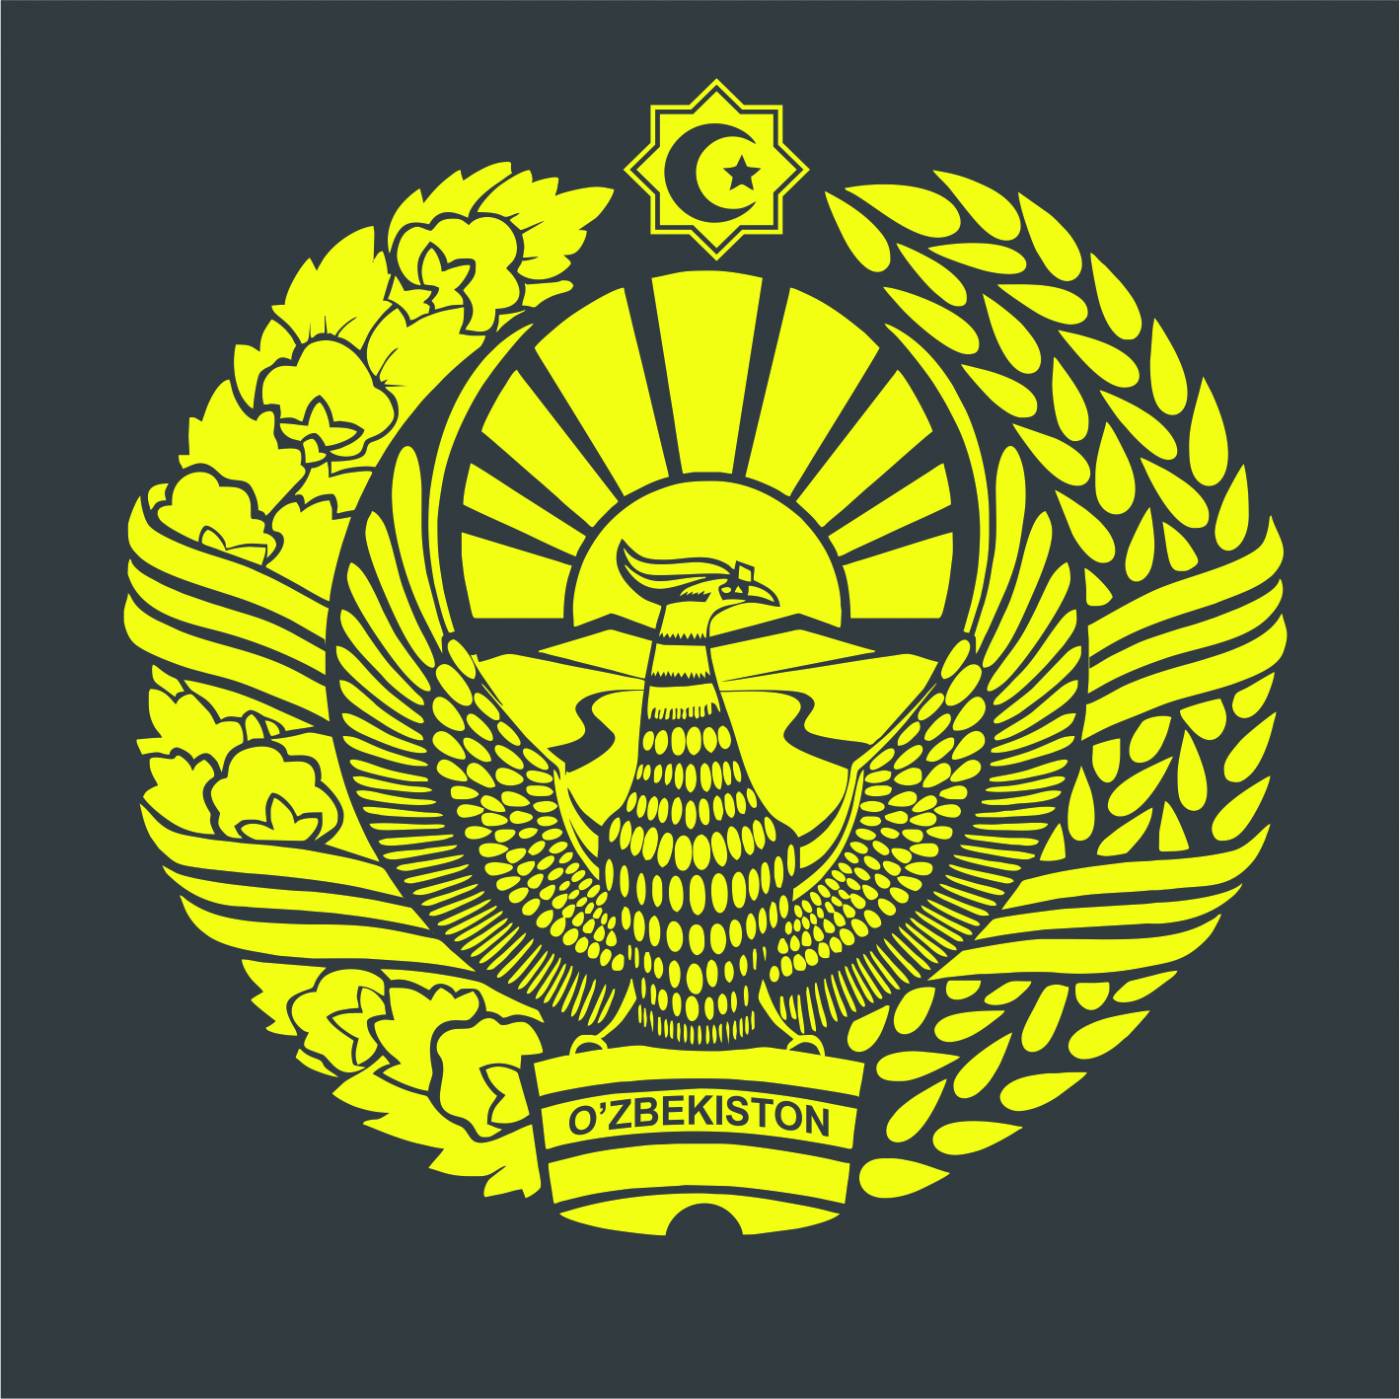 Герб Узбекистана